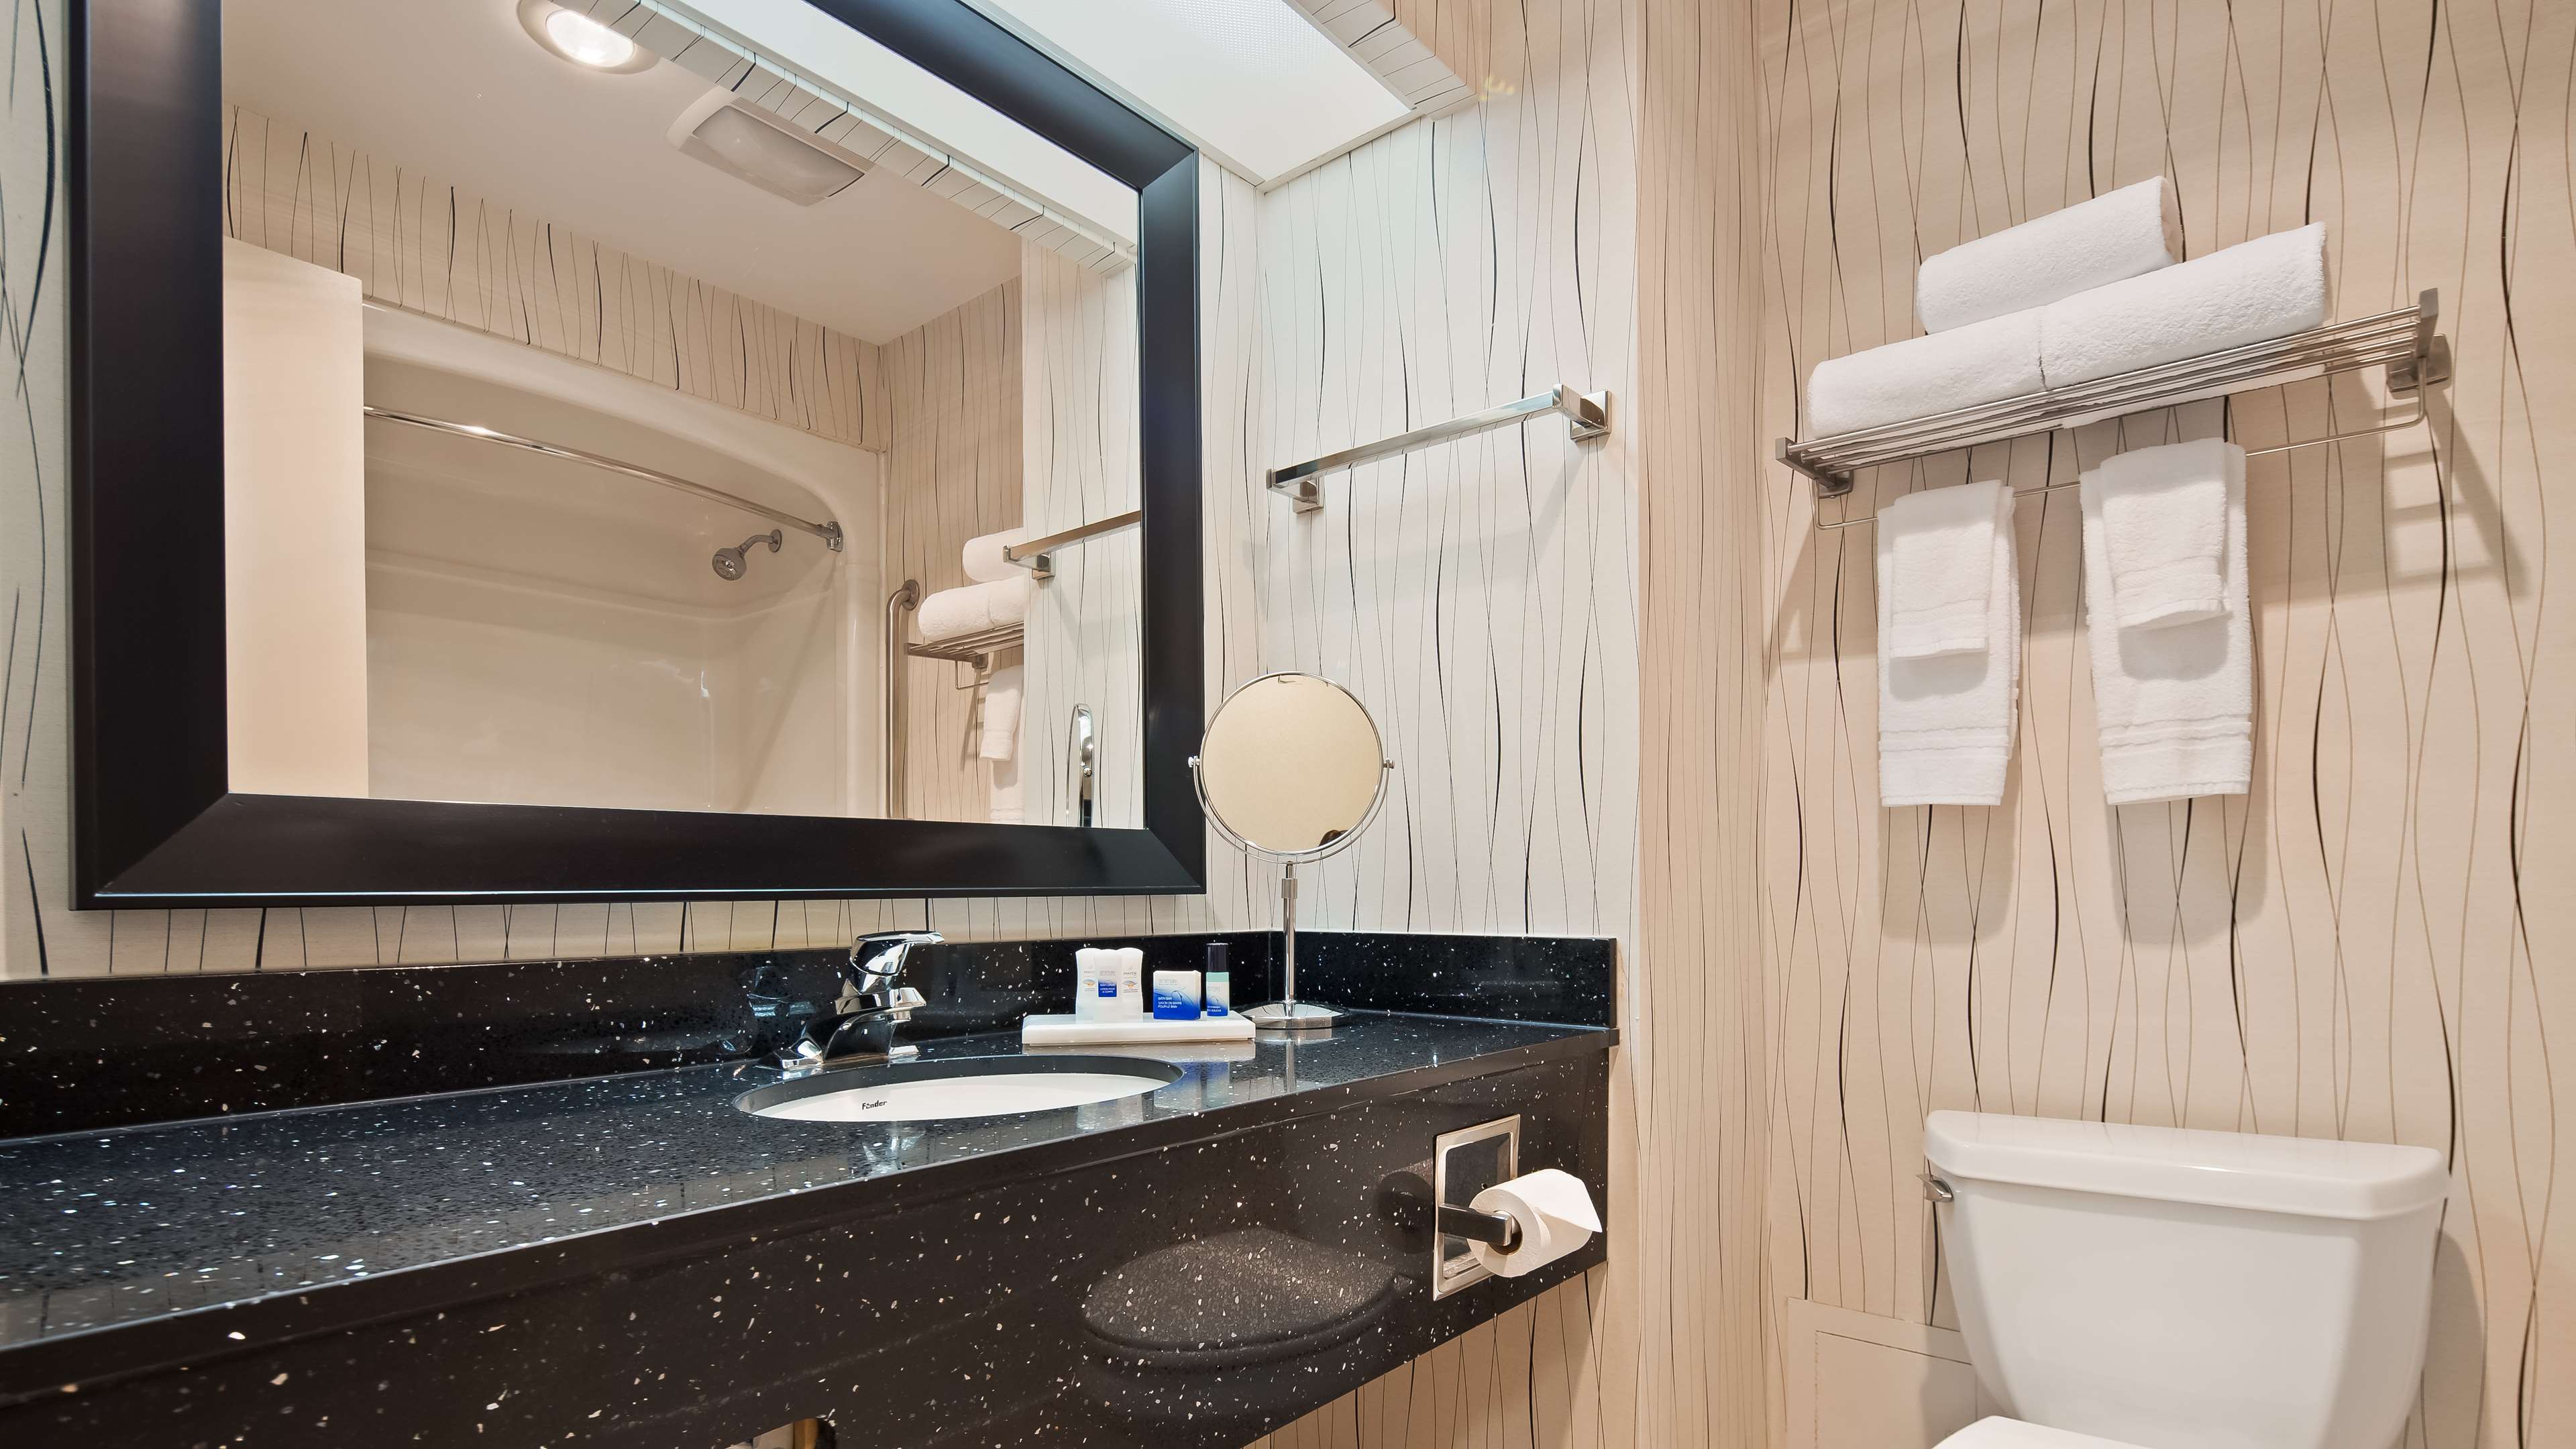 Best Western Plus Travel Hotel Toronto Airport in Toronto: Guest Bathroom